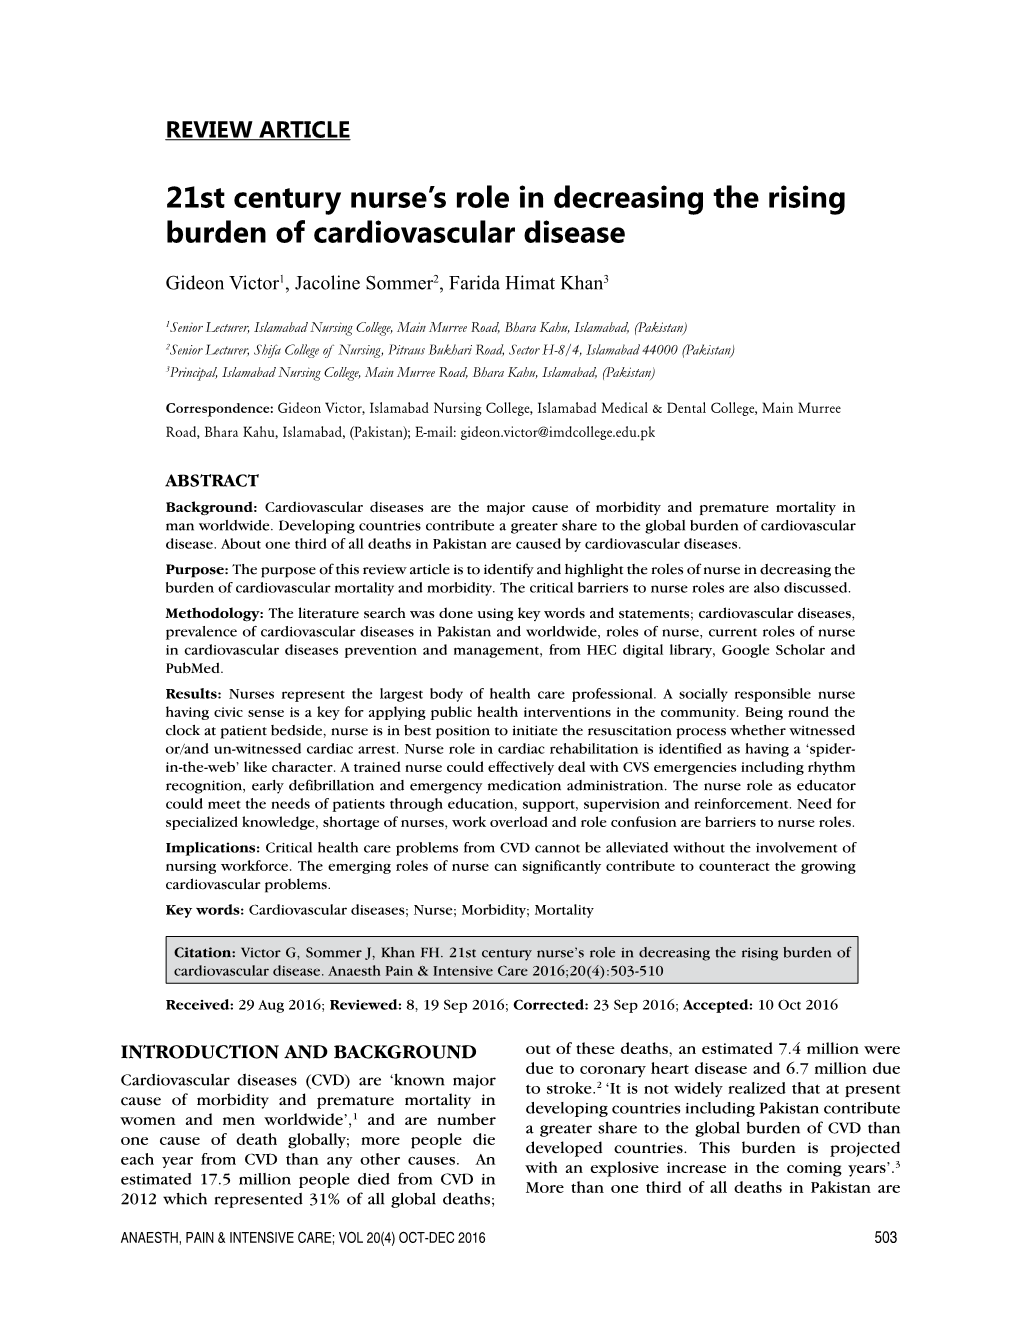 21St Century Nurse's Role in Decreasing the Rising Burden of Cardiovascular